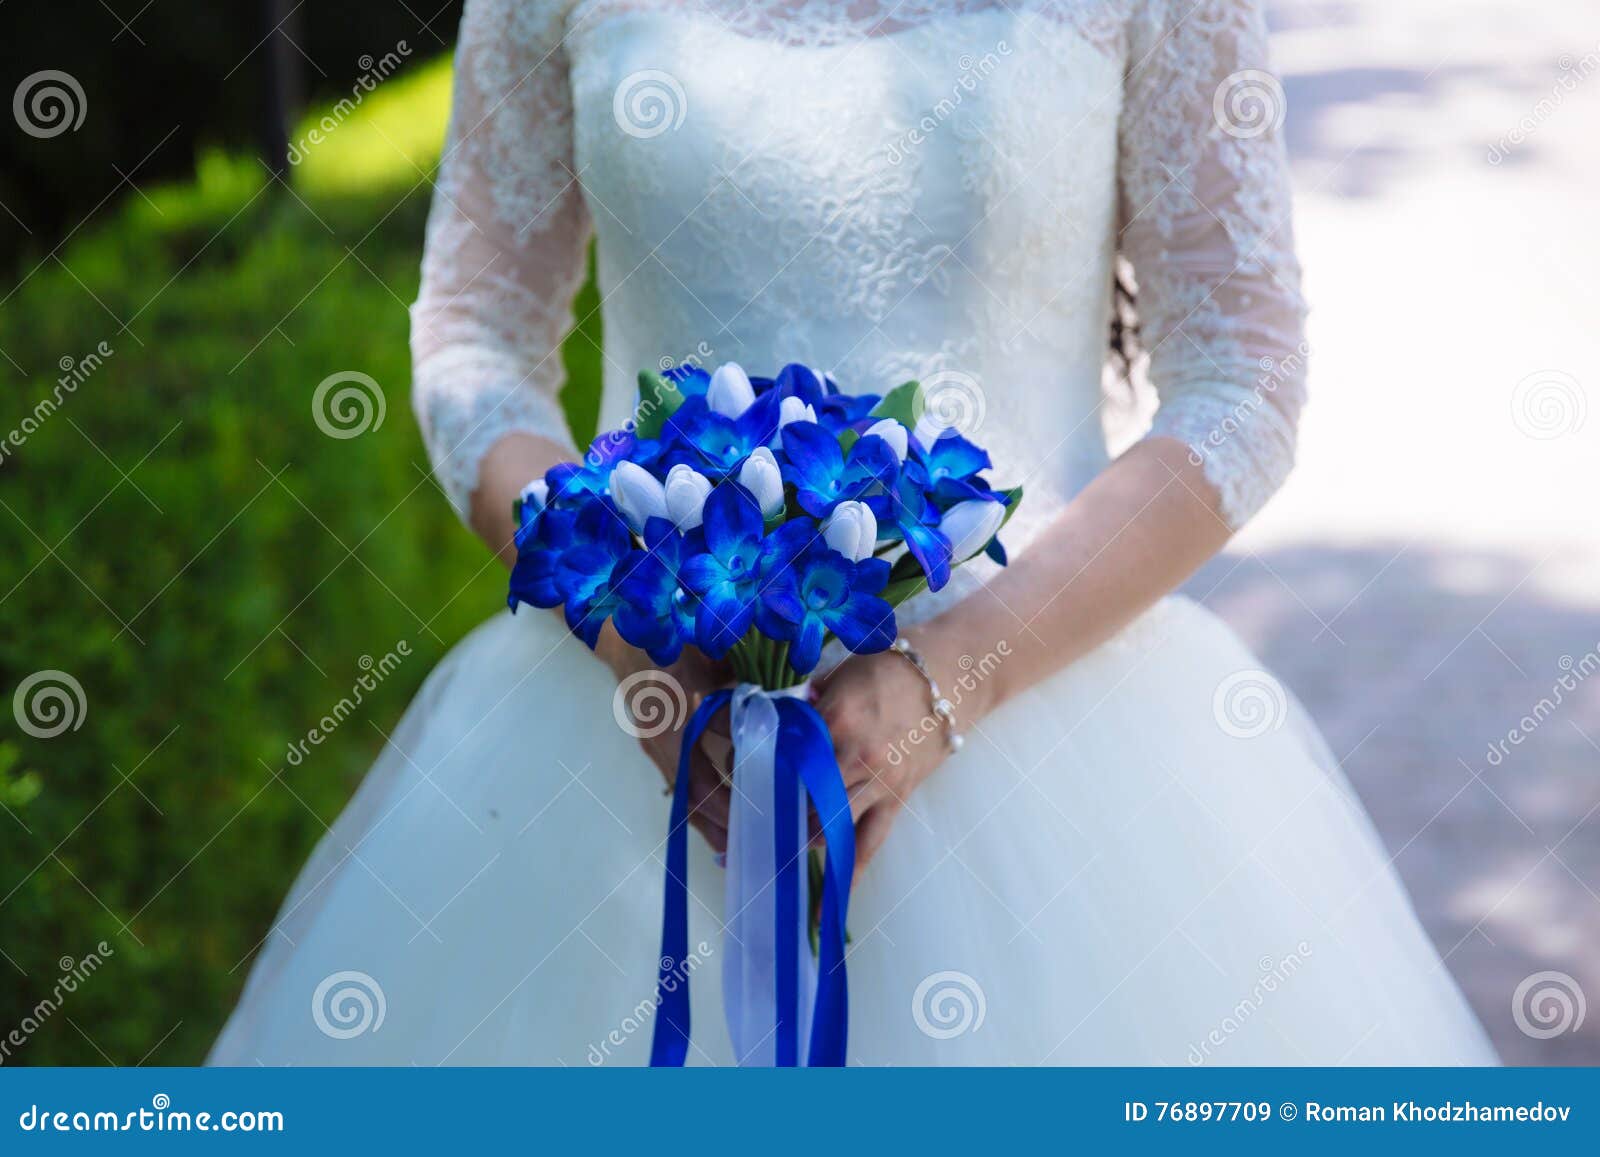 Vestido De Novia Con Flores Azules Spain, SAVE 39% - corekenya.org